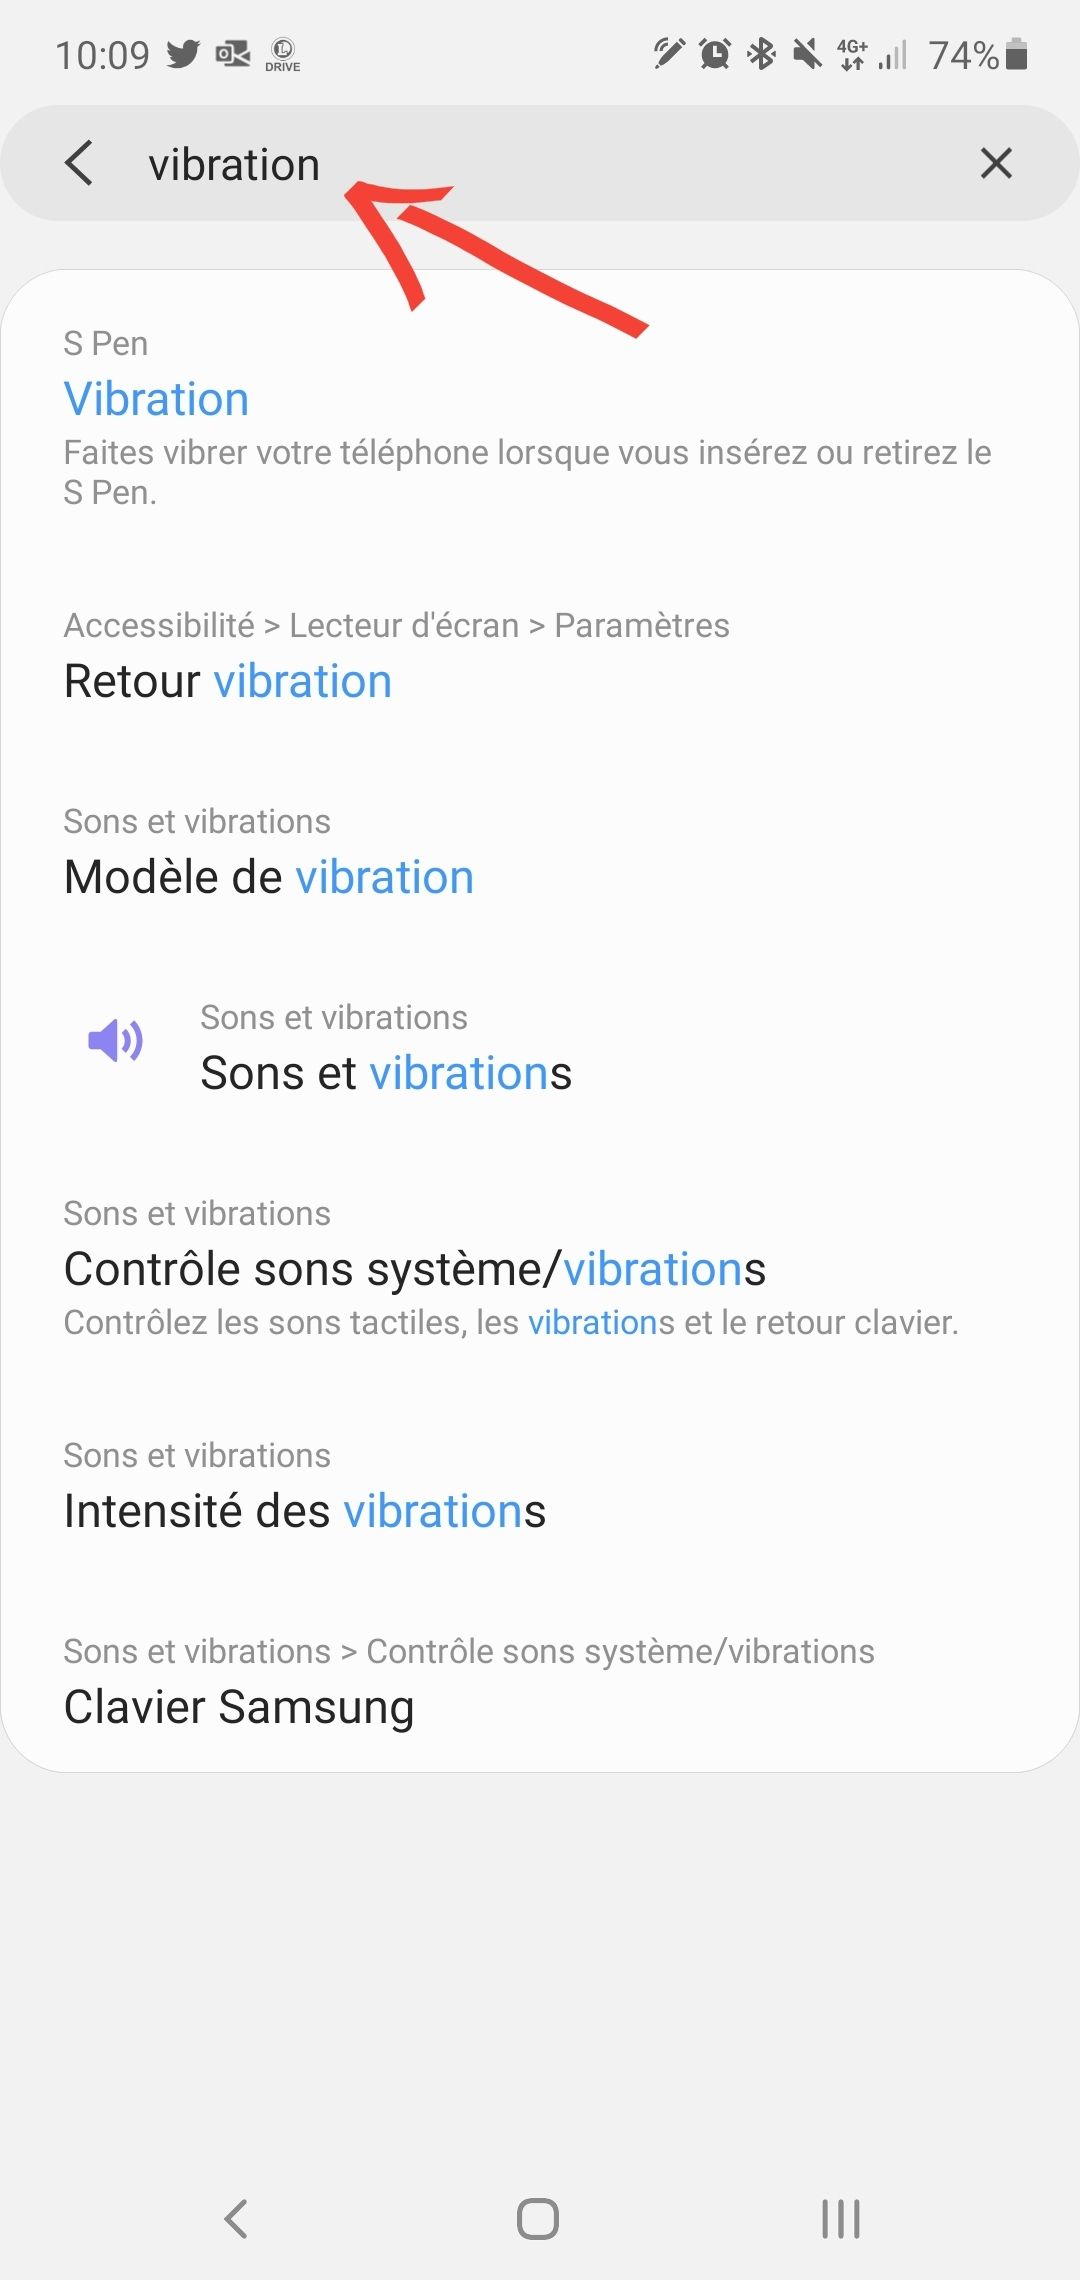 vibration clavier - Samsung Community